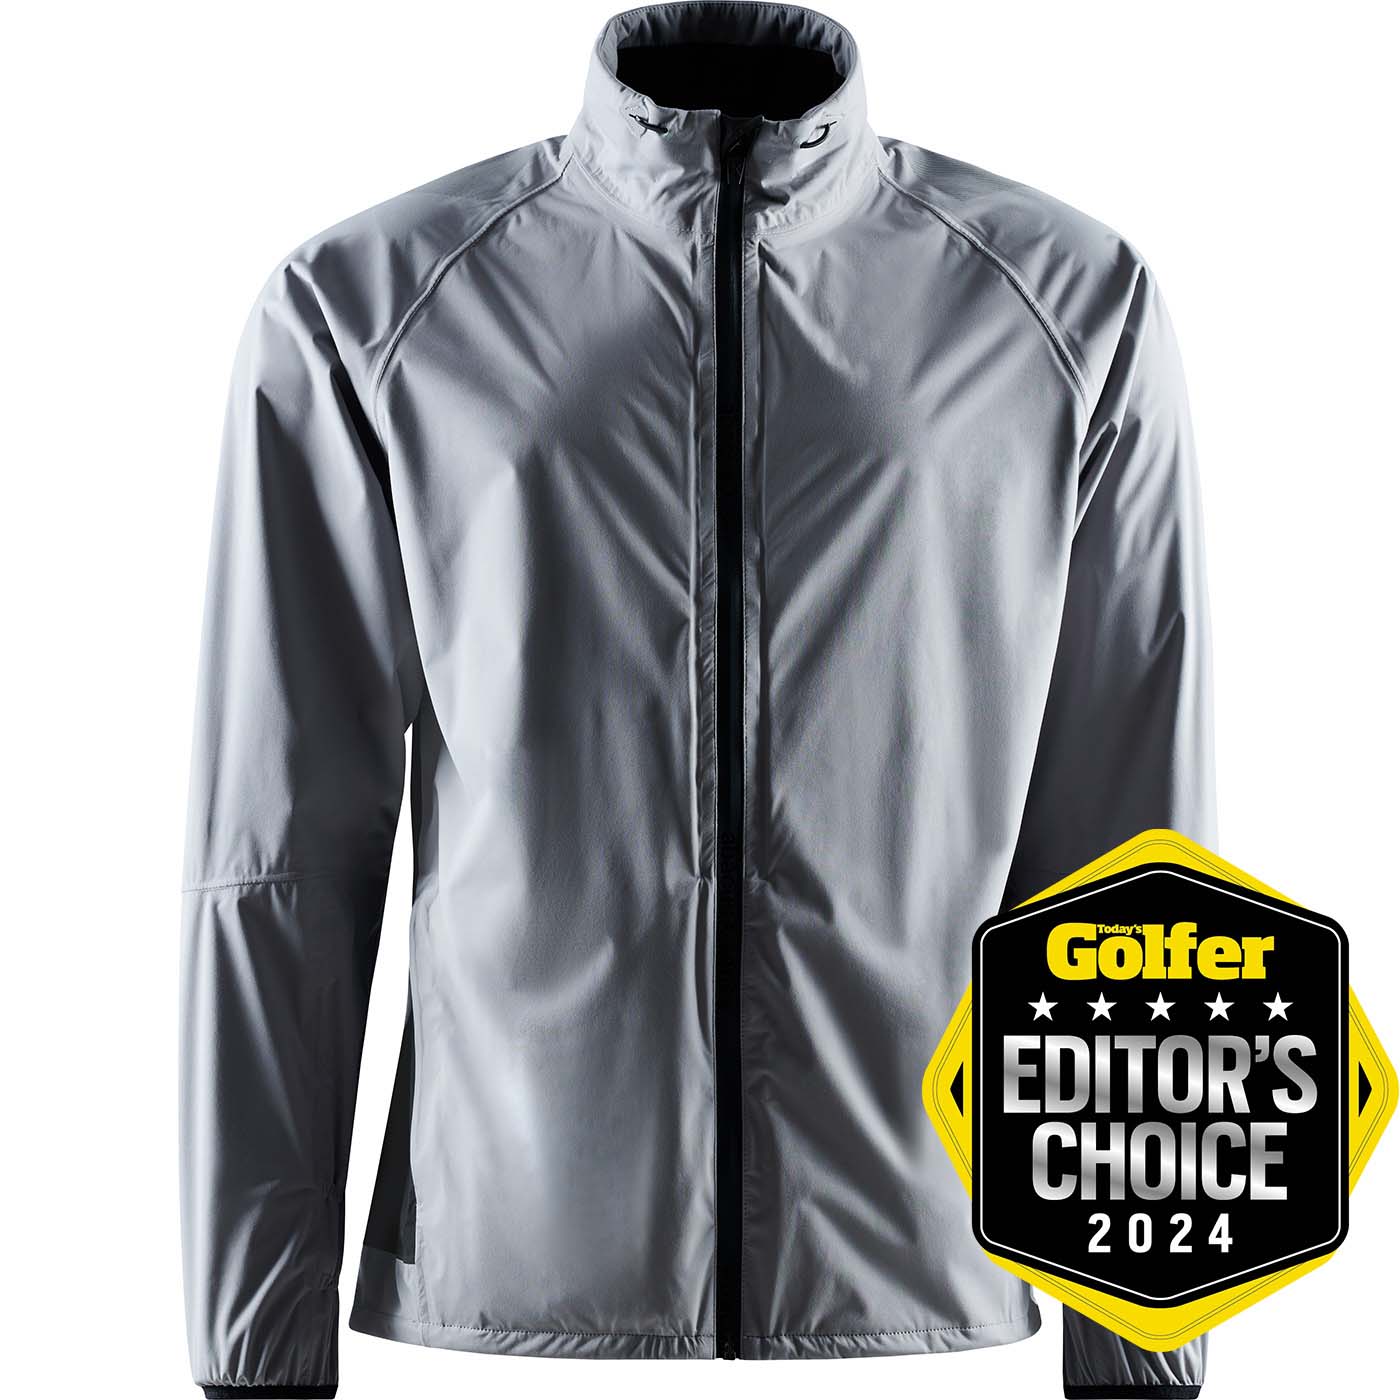 Pitch 37.5 rainjacket - grey Jackets - MEN, Golf clothing